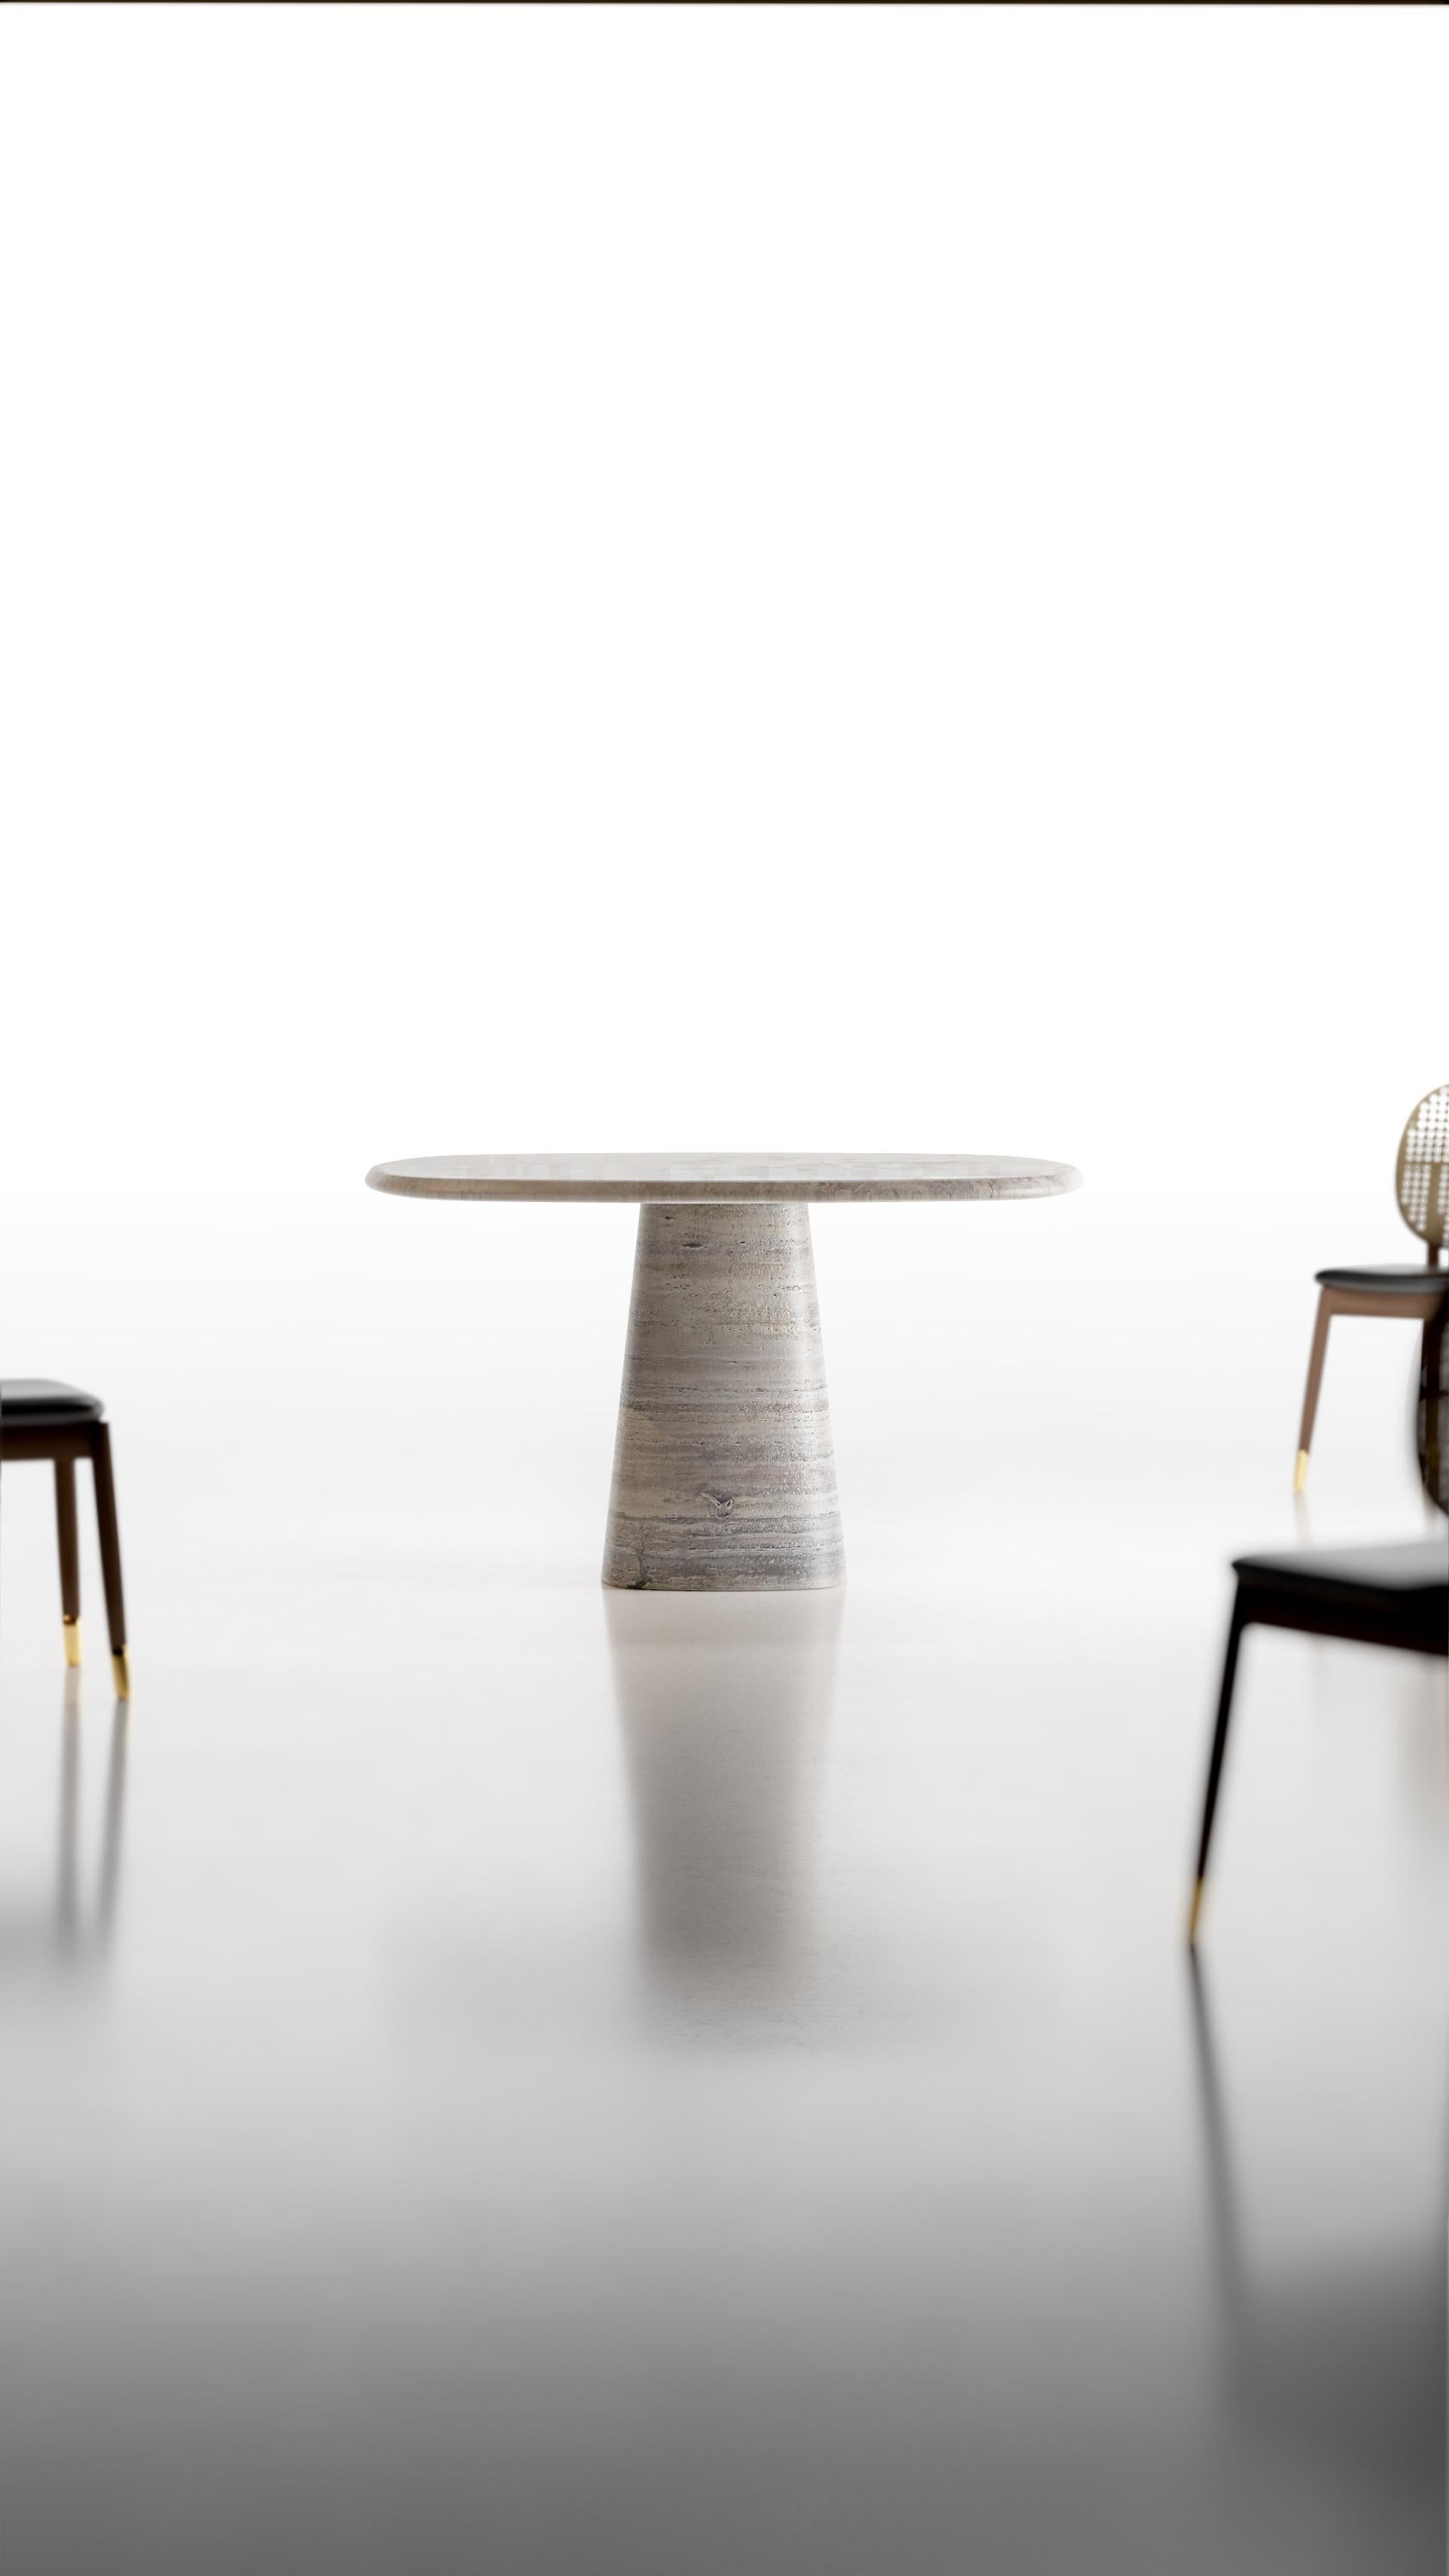 Italian Kilknos Wedge Table by Marmi Serafini For Sale